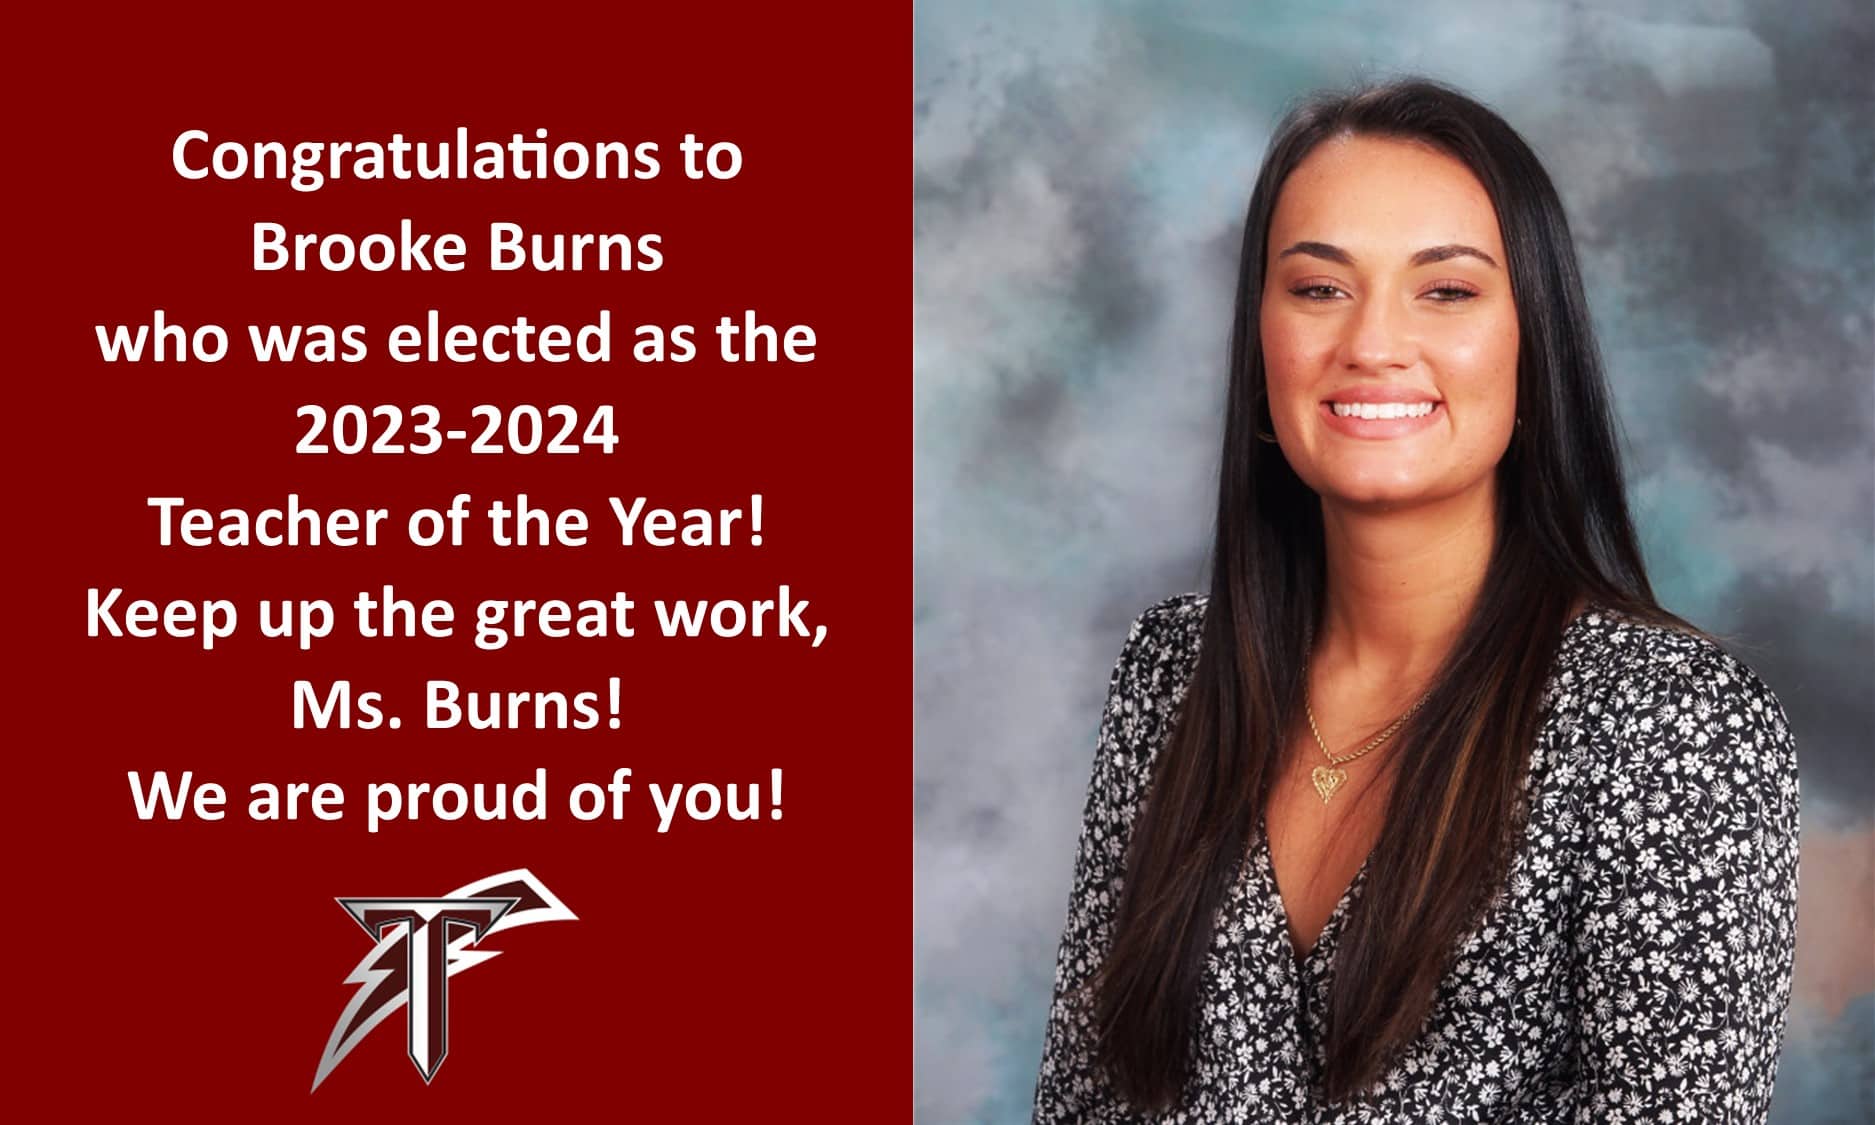 Brooke Burns, 2023-2024 Teacher of the Year